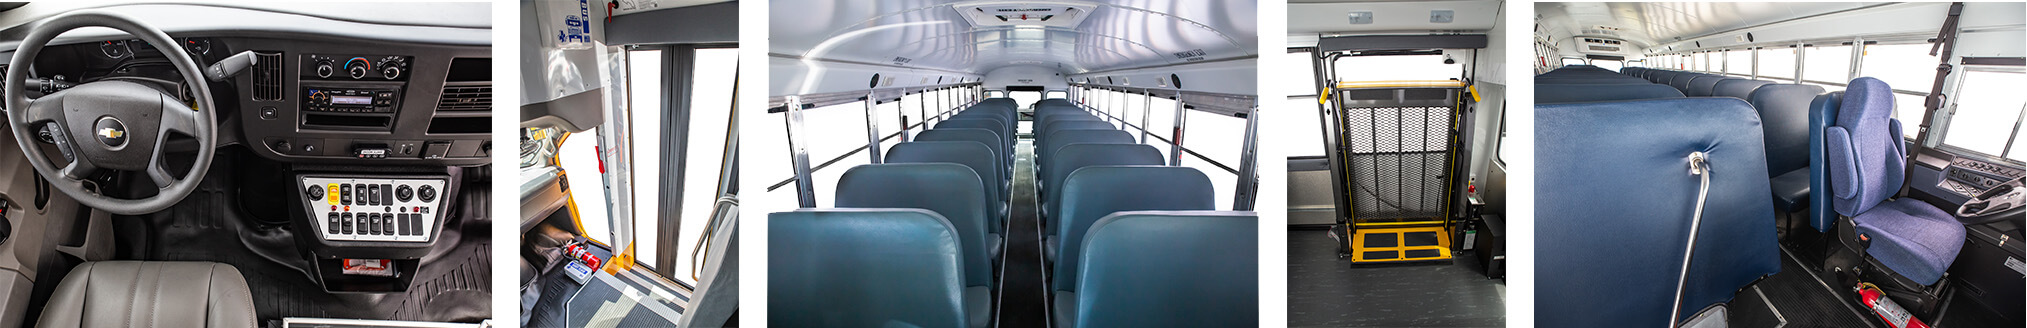 features inside school bus for sale in arkansas